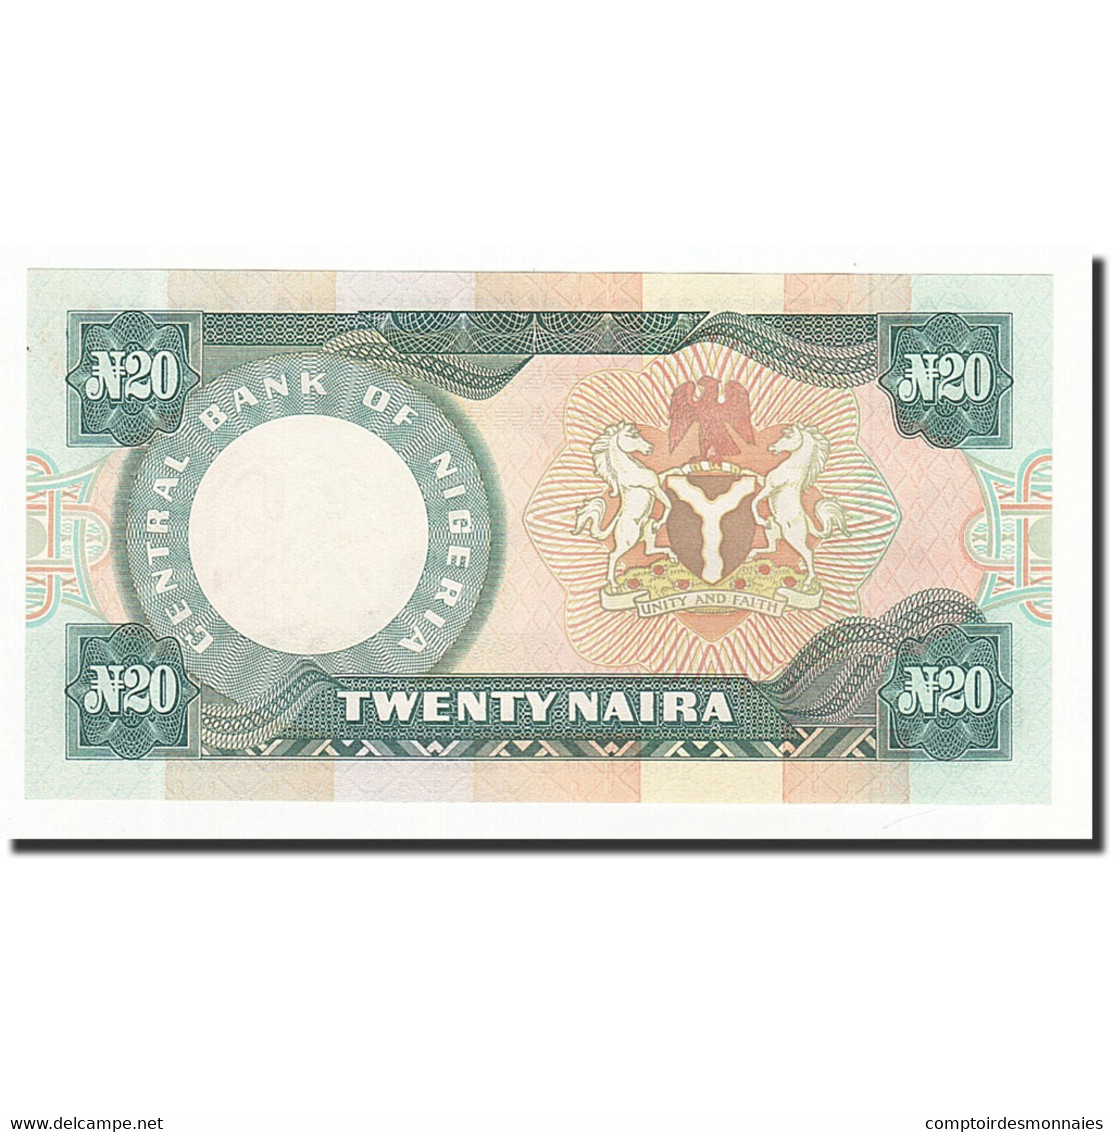 Billet, Nigéria, 20 Naira, UNDATED (1984), KM:26b, NEUF - Nigeria